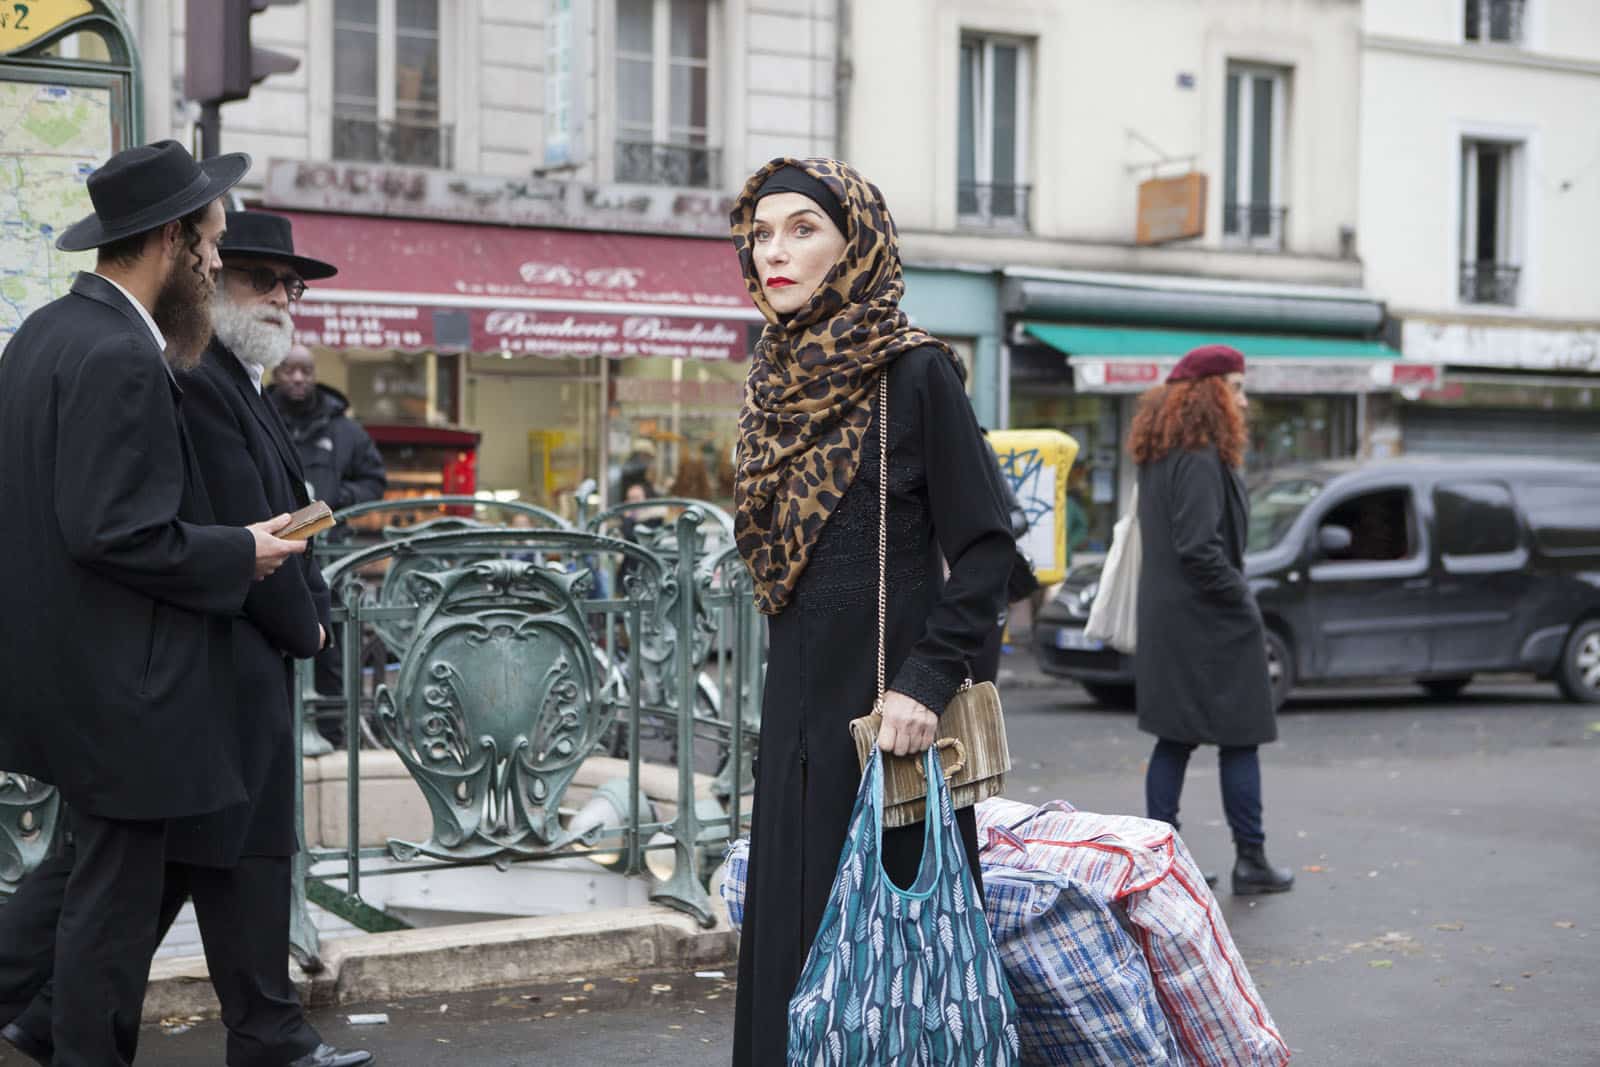 Biografilm 2021 – La padrina – Parigi ha una nuova regina: recensione del film con Isabelle Huppert